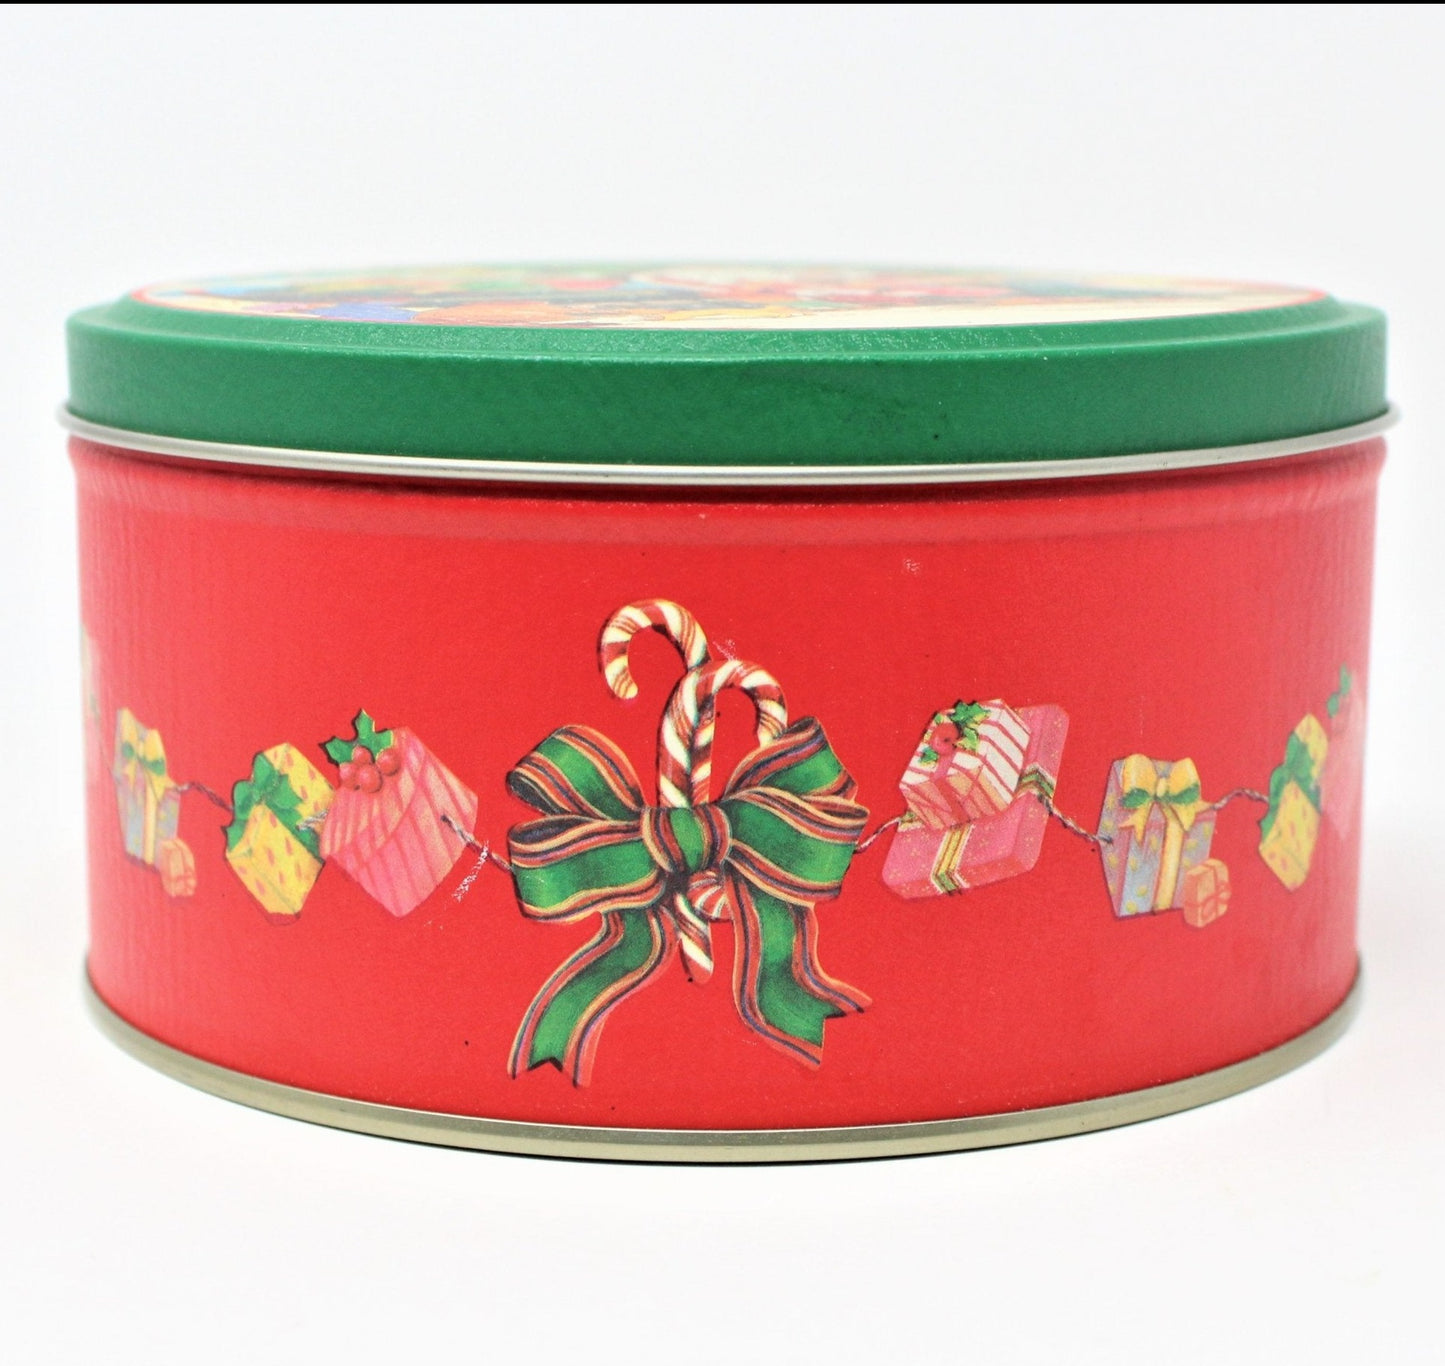 Gift Tin / Candy Tin, Wang's International, Santa with Elves & Children, Vintage